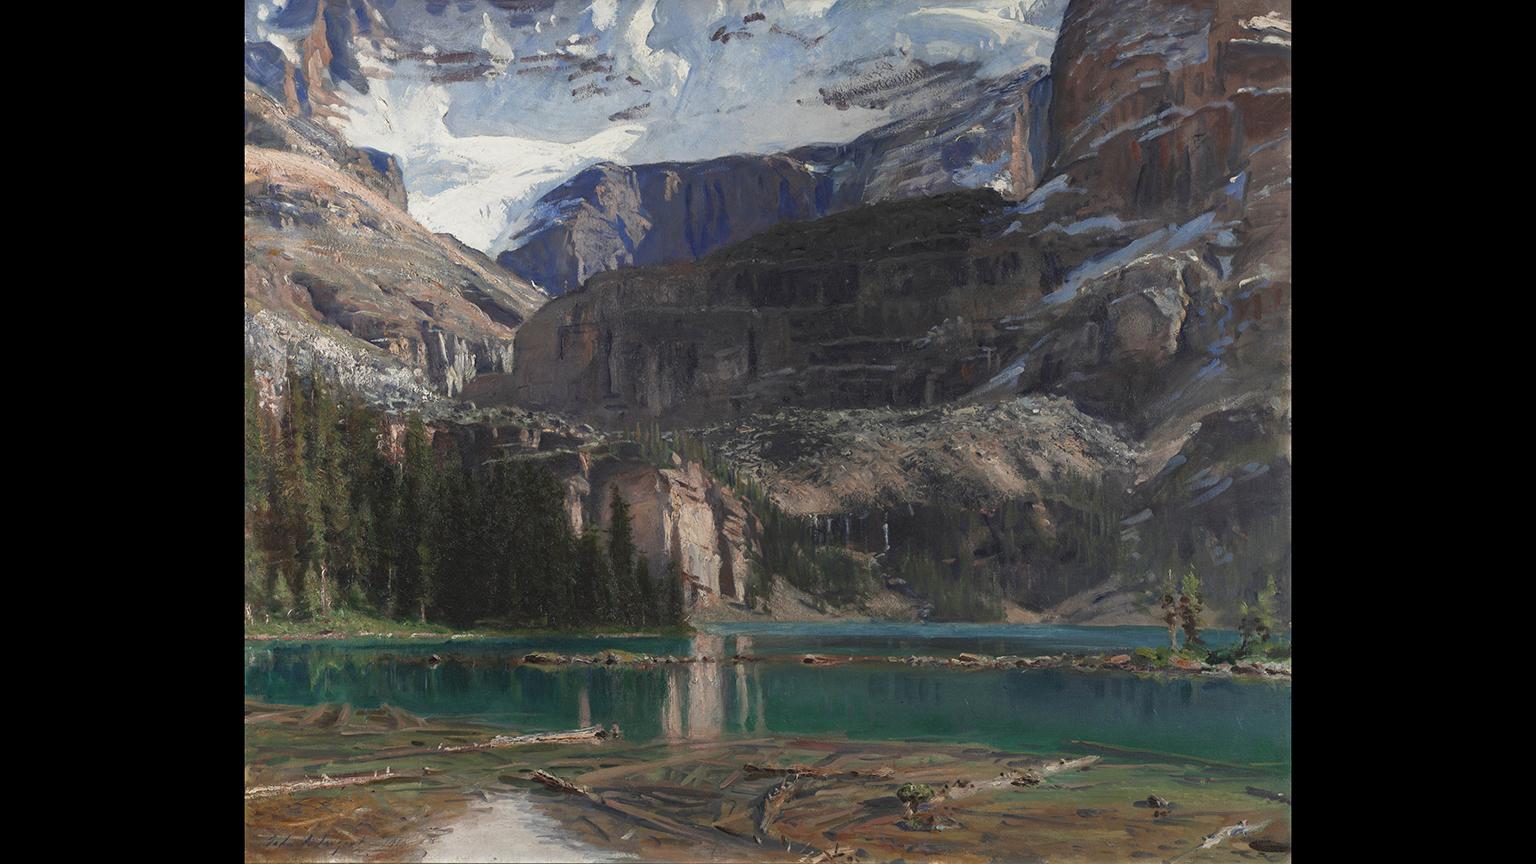 John Singer Sargent. “Lake O'Hara,” 1916. Harvard Art Museums/Fogg Museum, Louise E. Bettens Fund.